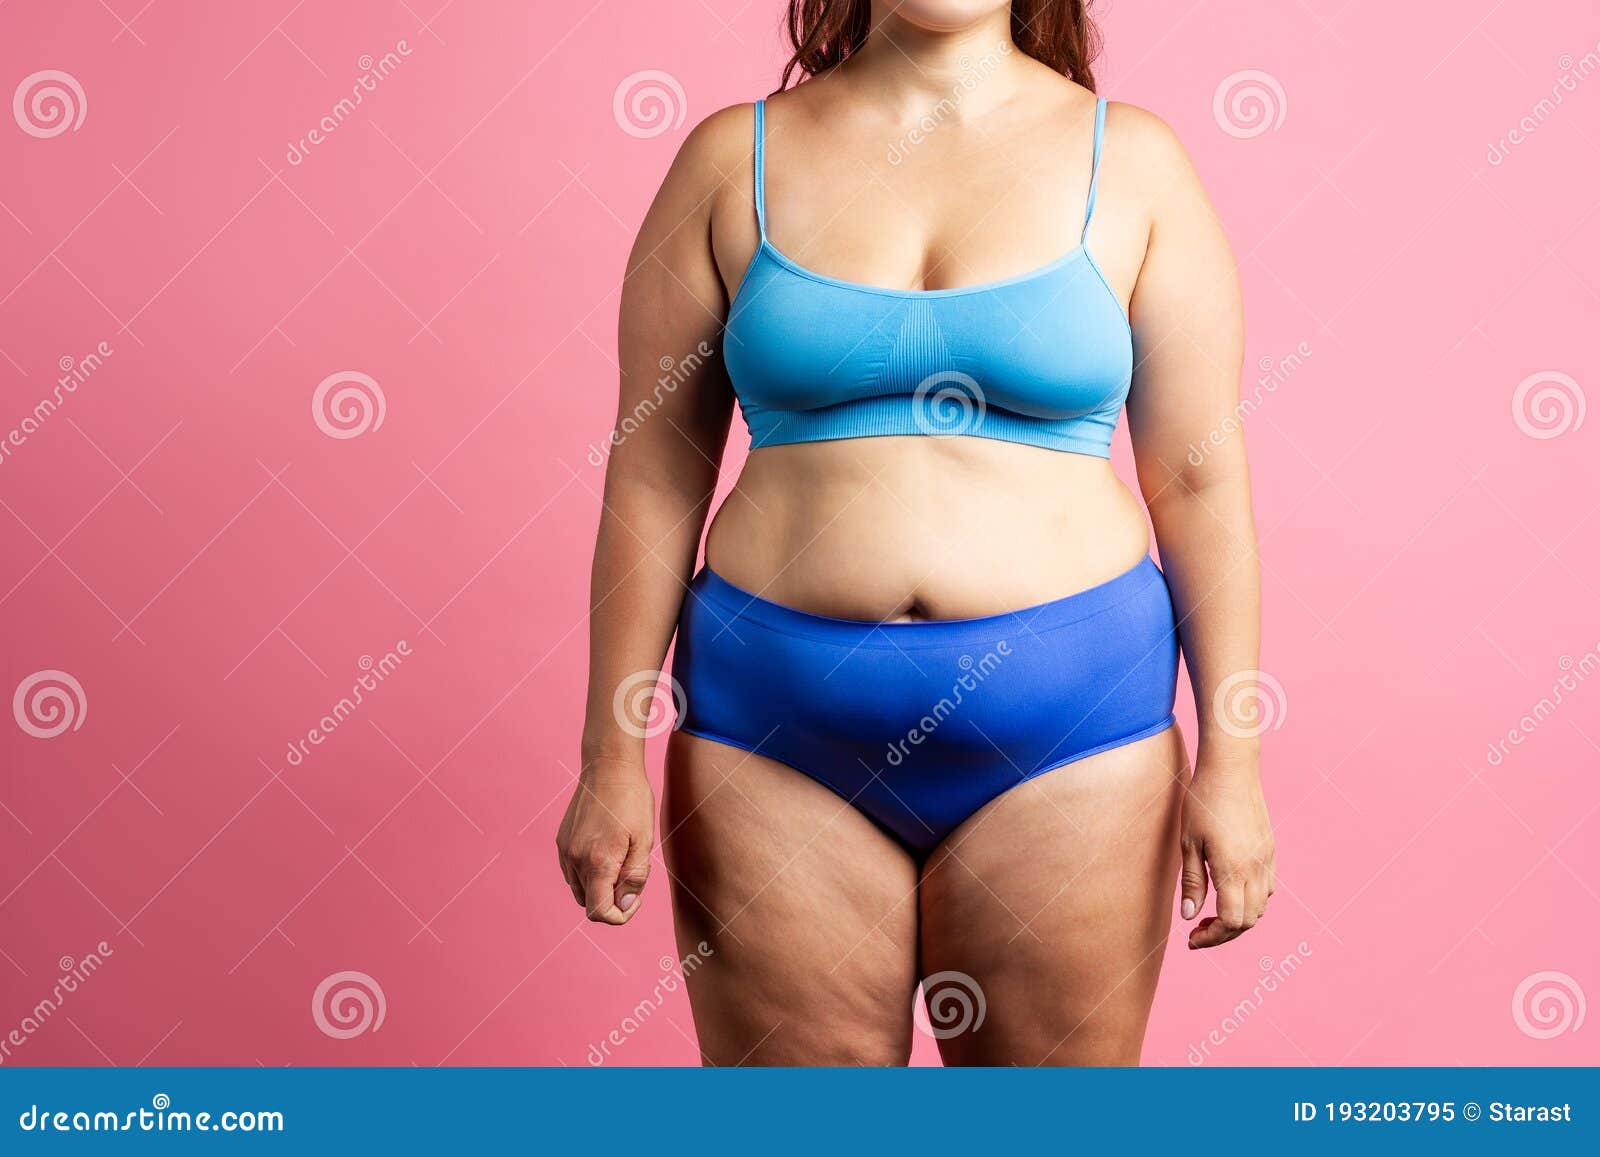 bestøve Vittig område Plus Size Model in Blue Lingerie, Fat Woman on Pink Background, Overweight  Female Body Stock Image - Image of beauty, oversized: 193203795